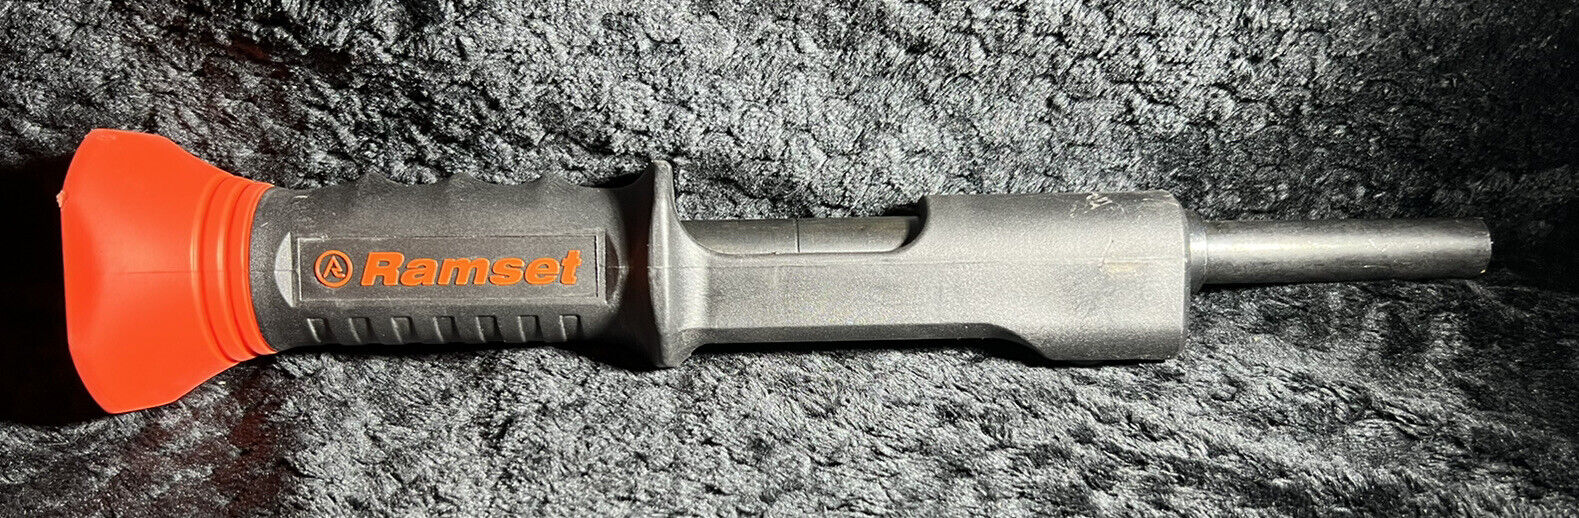 Ramset 40066 Trigger Activated .22 Caliber Powder Actuated Tool Single Shot